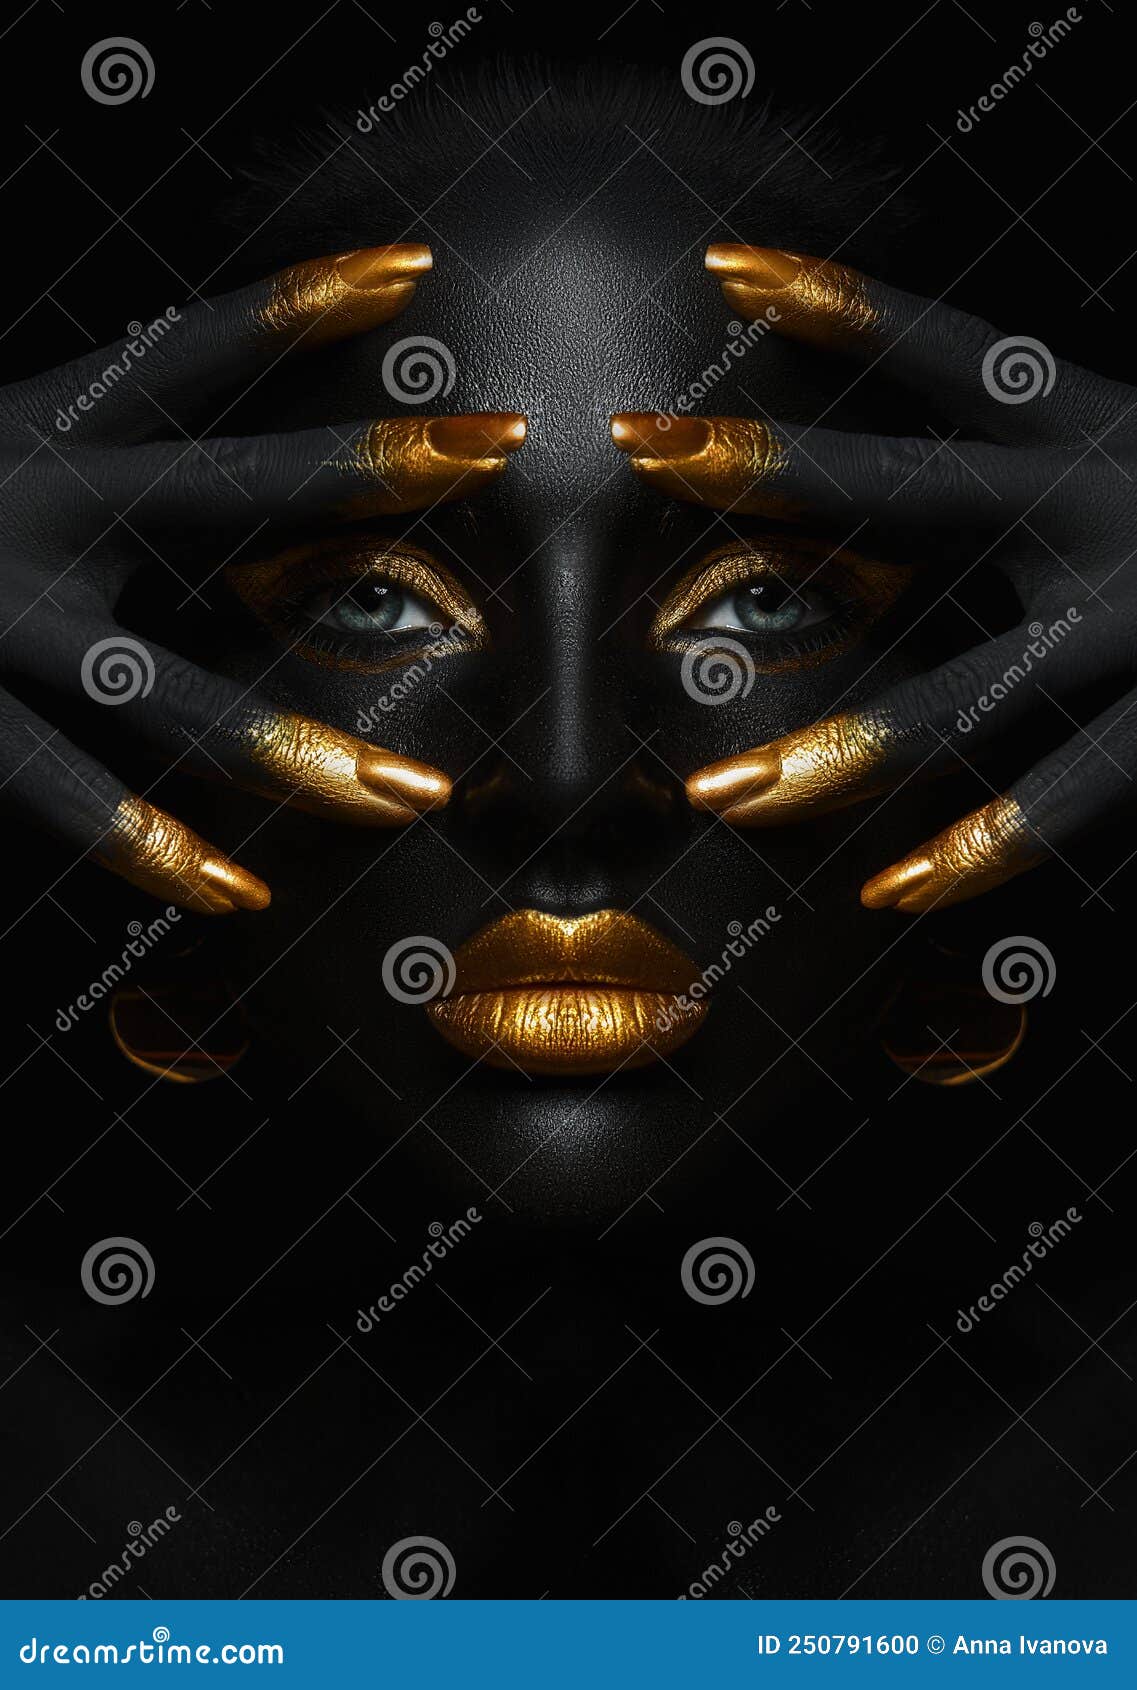 Beauty Woman Black Skin Color Body Art Gold Makeup Lips Eyelids Fingertips Nails In Gold Color